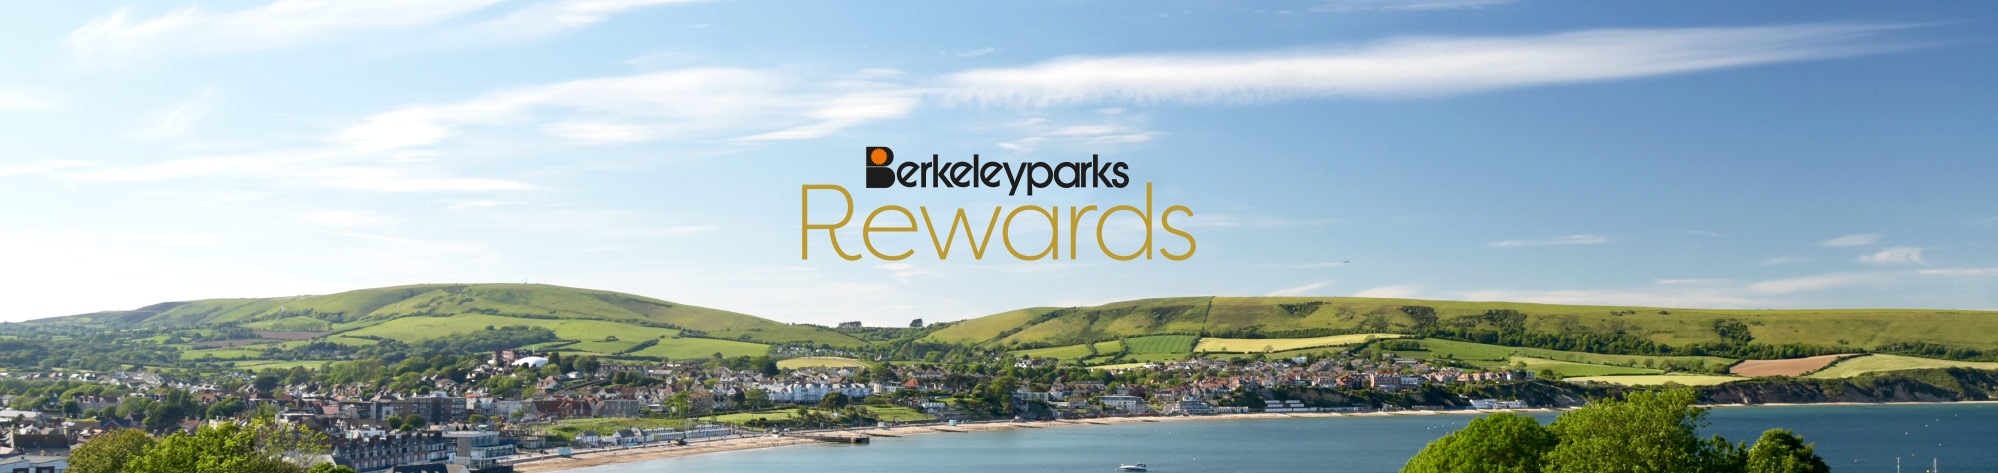 Berkeleyparks rewards